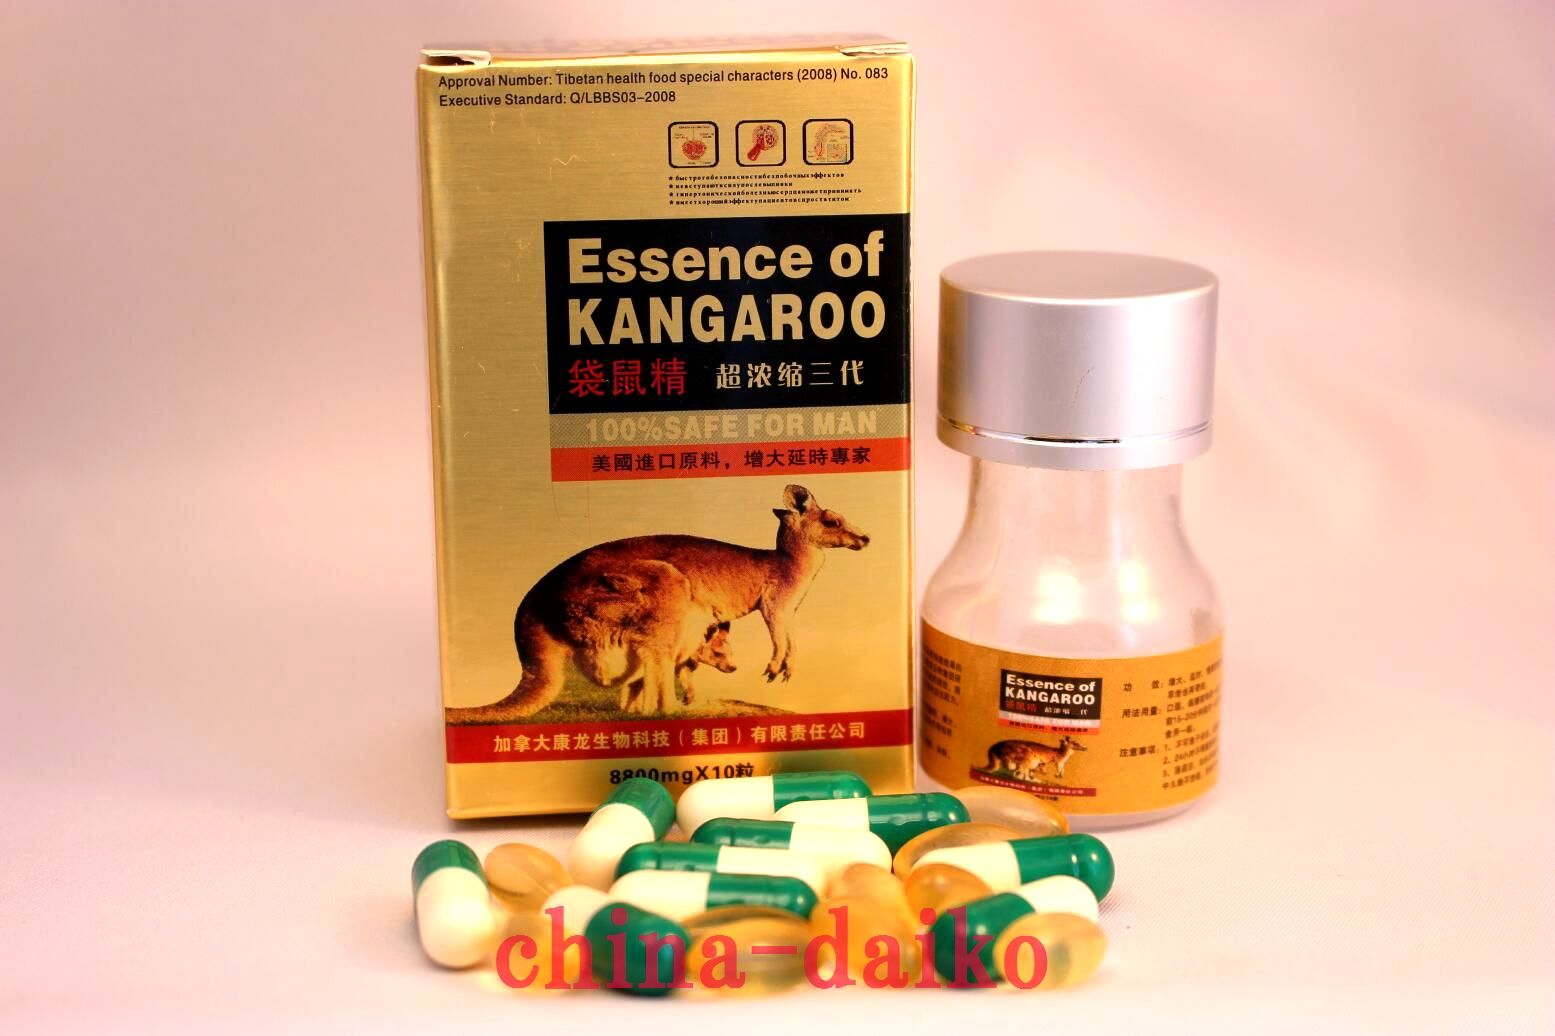 [Essence of Kangaroo] 8800x10+10粒/箱